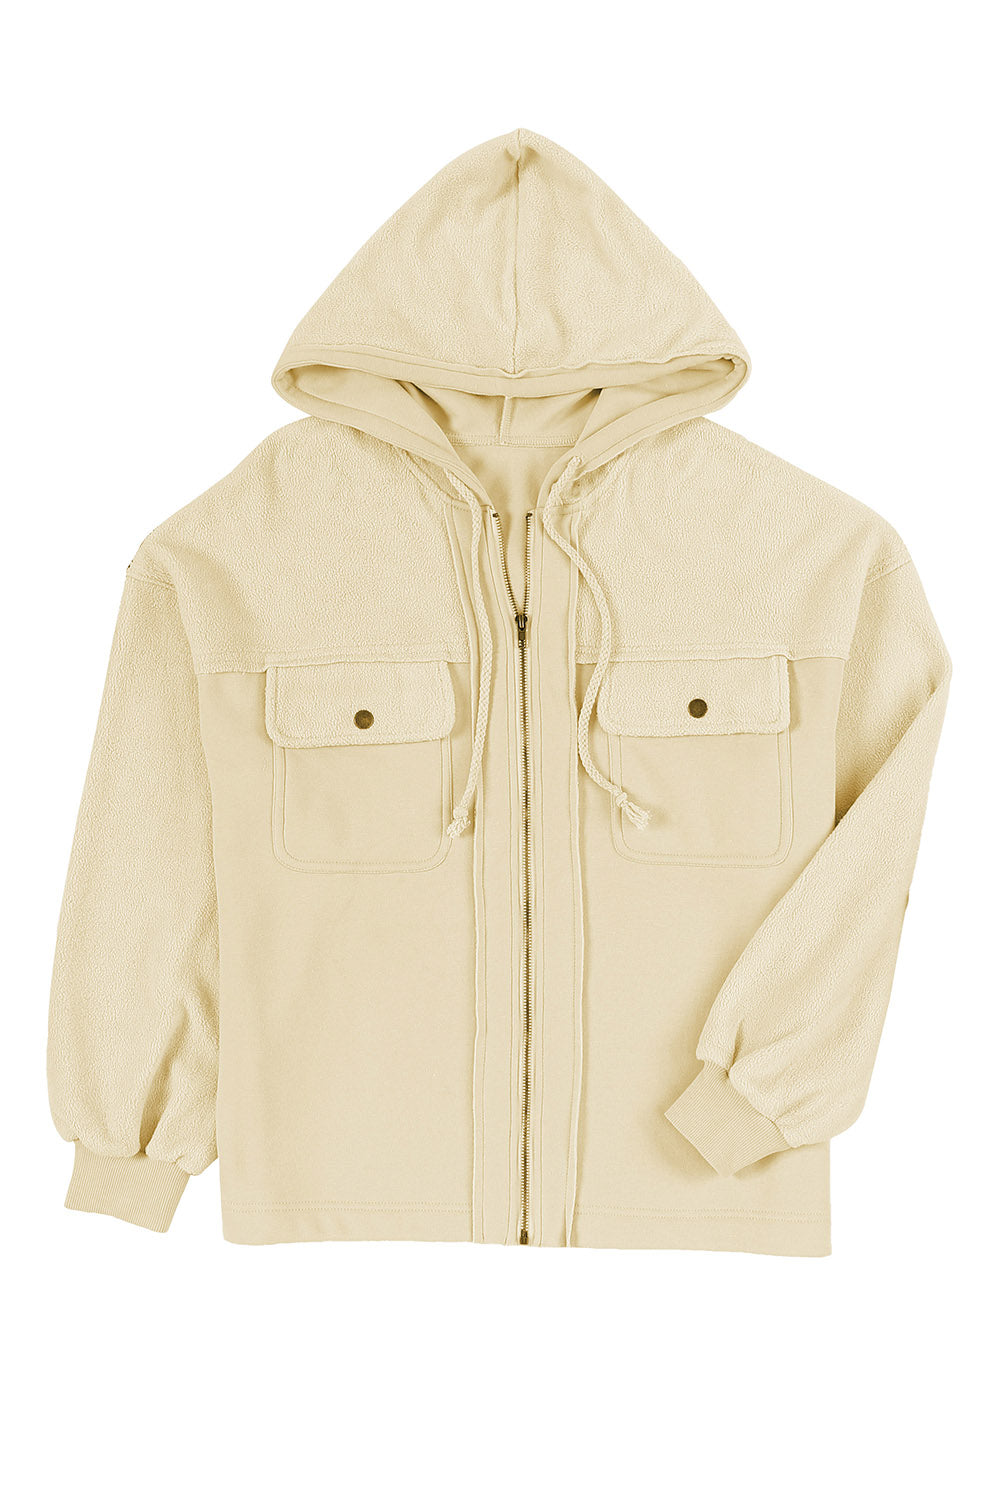 Apricot Bishop Sleeve Zip Up Hoodie Jacket with Flap Pockets